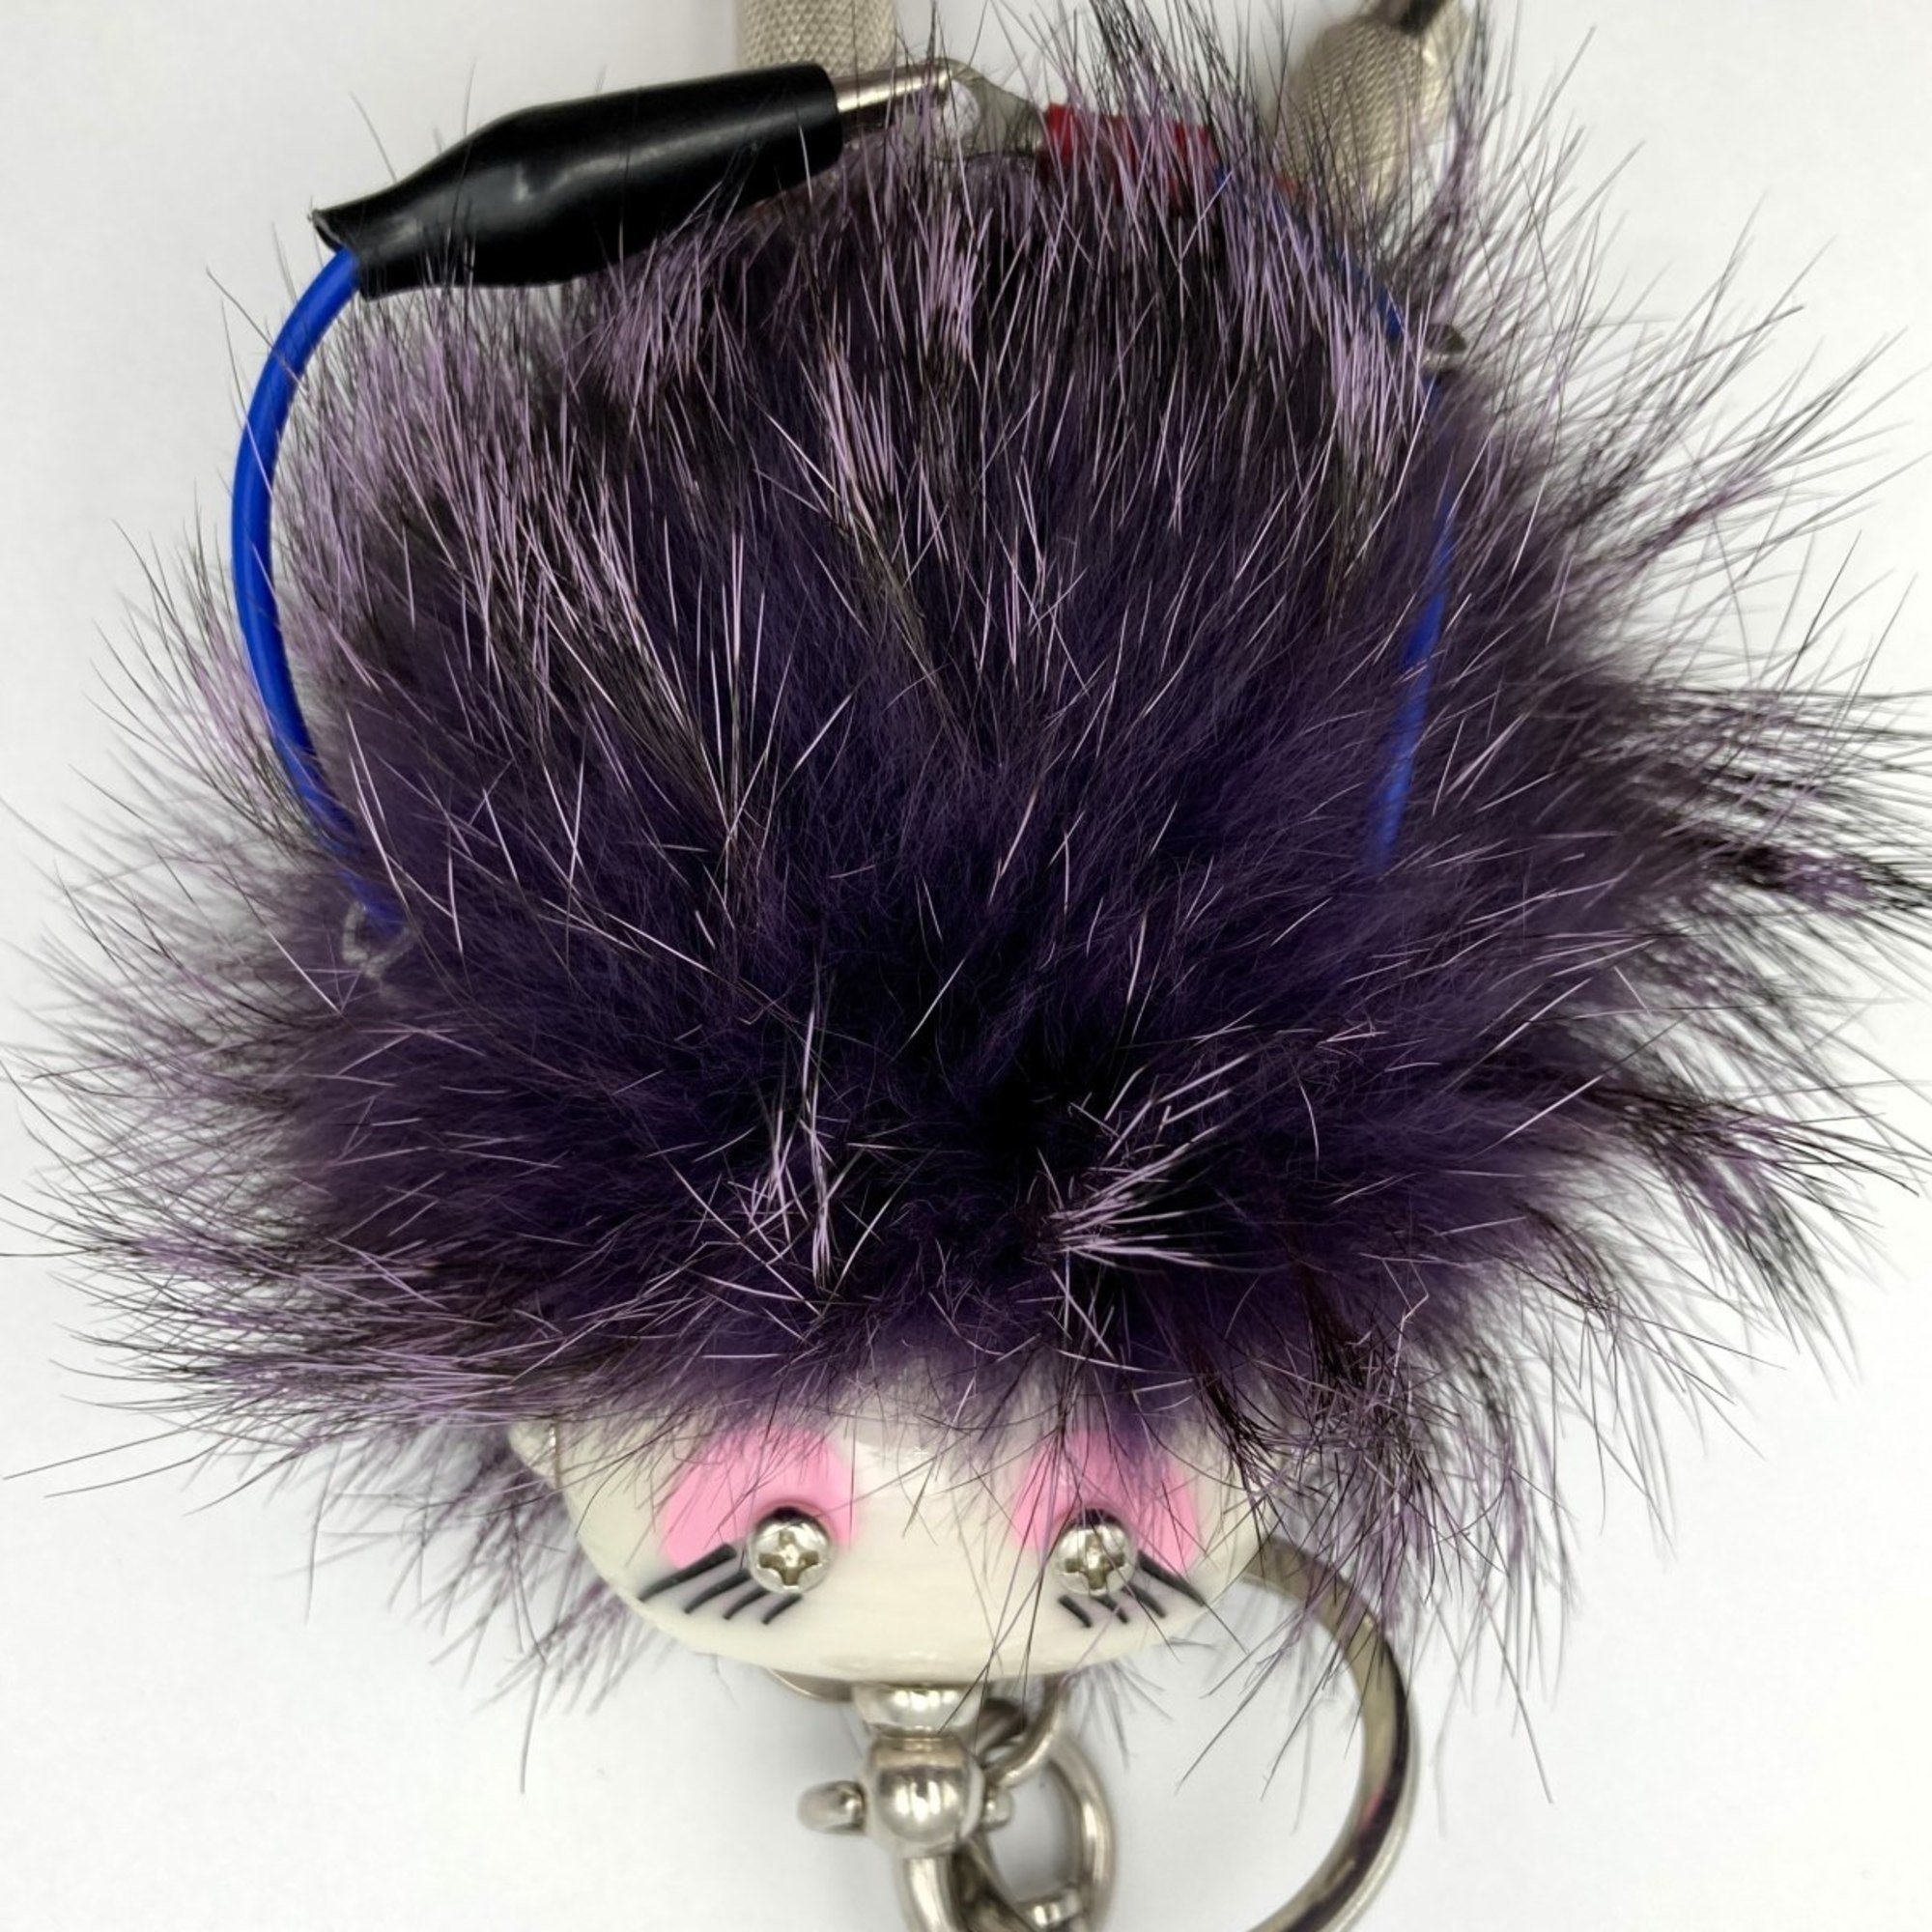 PRADA Prada key chain bag charm purple robot fur collar with box for men and women